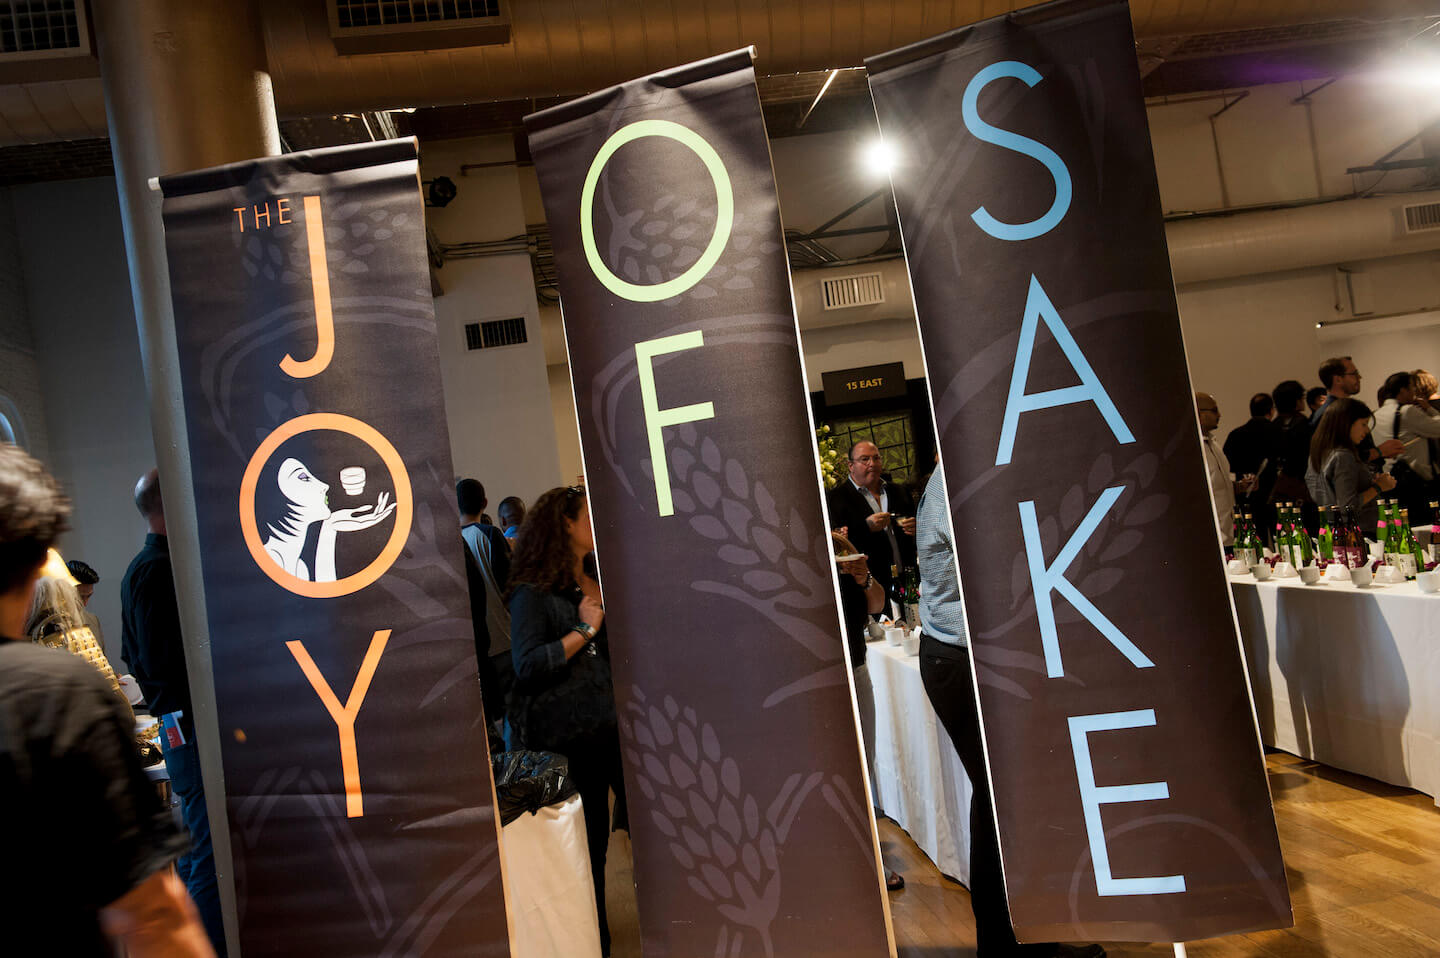 The Joy of Sake banner signage (2014 New York)